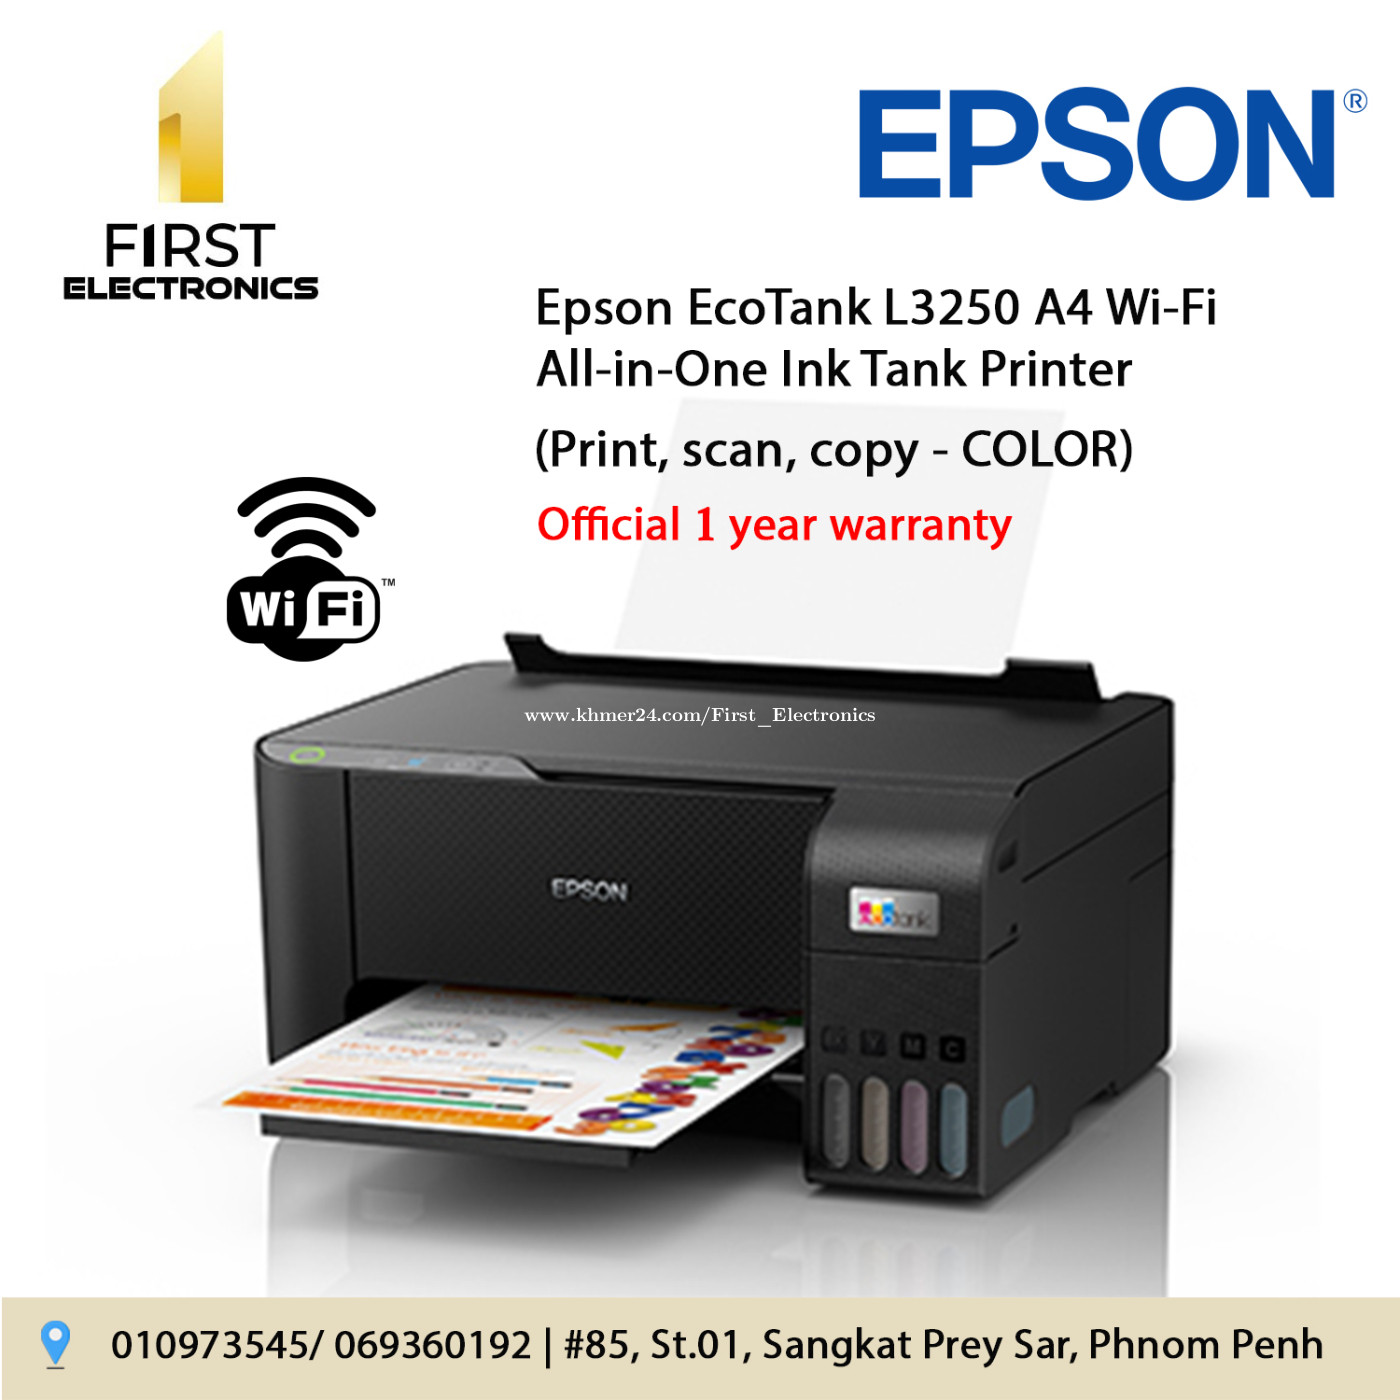 Epson Ecotank L3250 A4 Wi Fi All In One Ink Tank Printer តំលៃ 19500 ក្នុង ព្រៃស ដង្កោ 9963